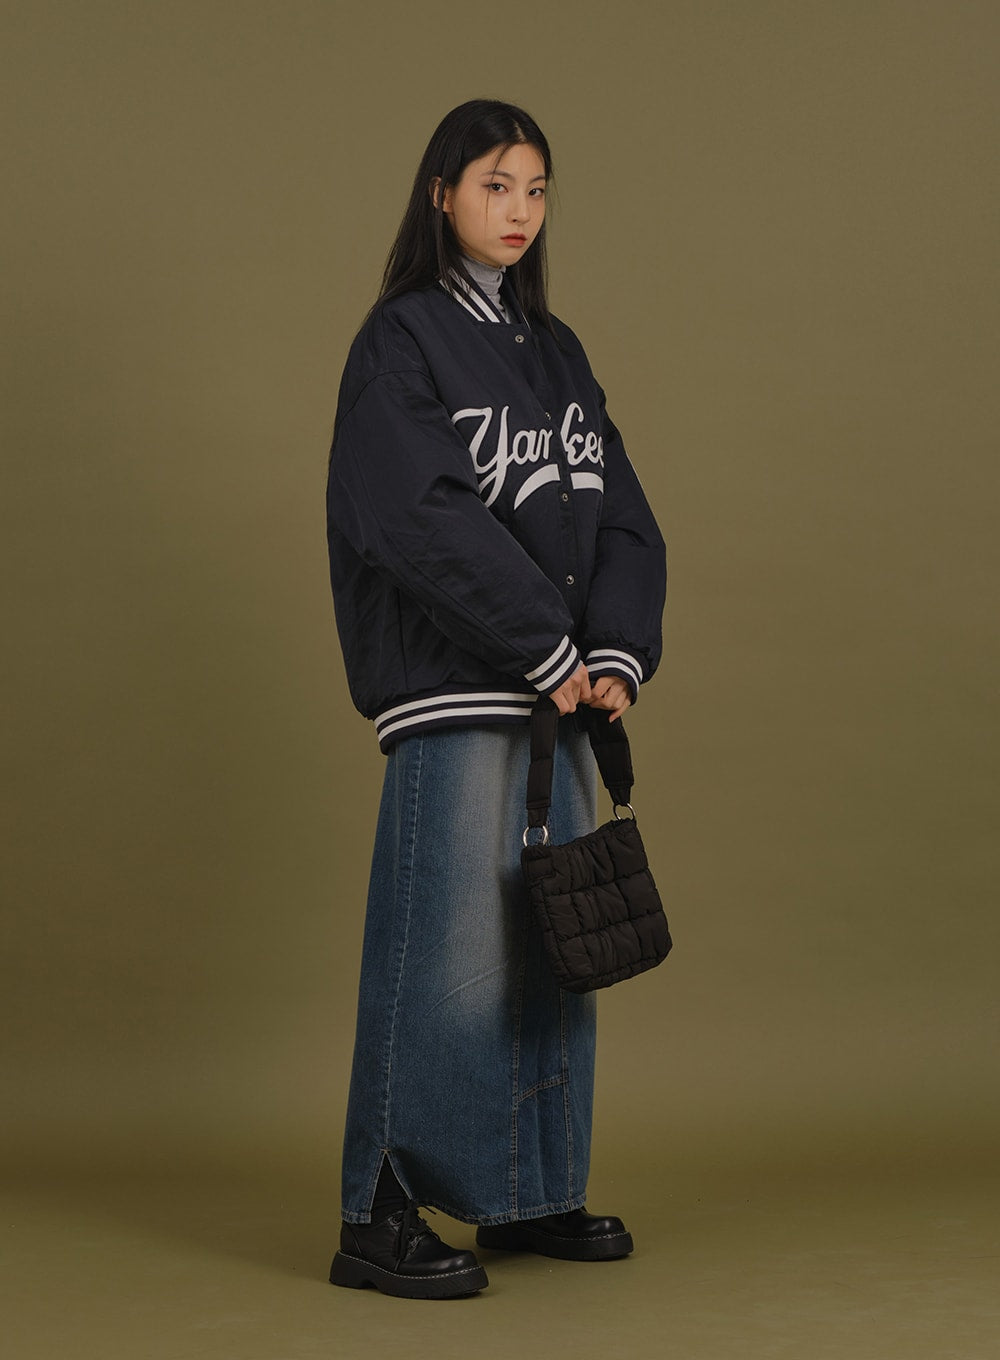 How to wear the varsity style according to Korean fashion?